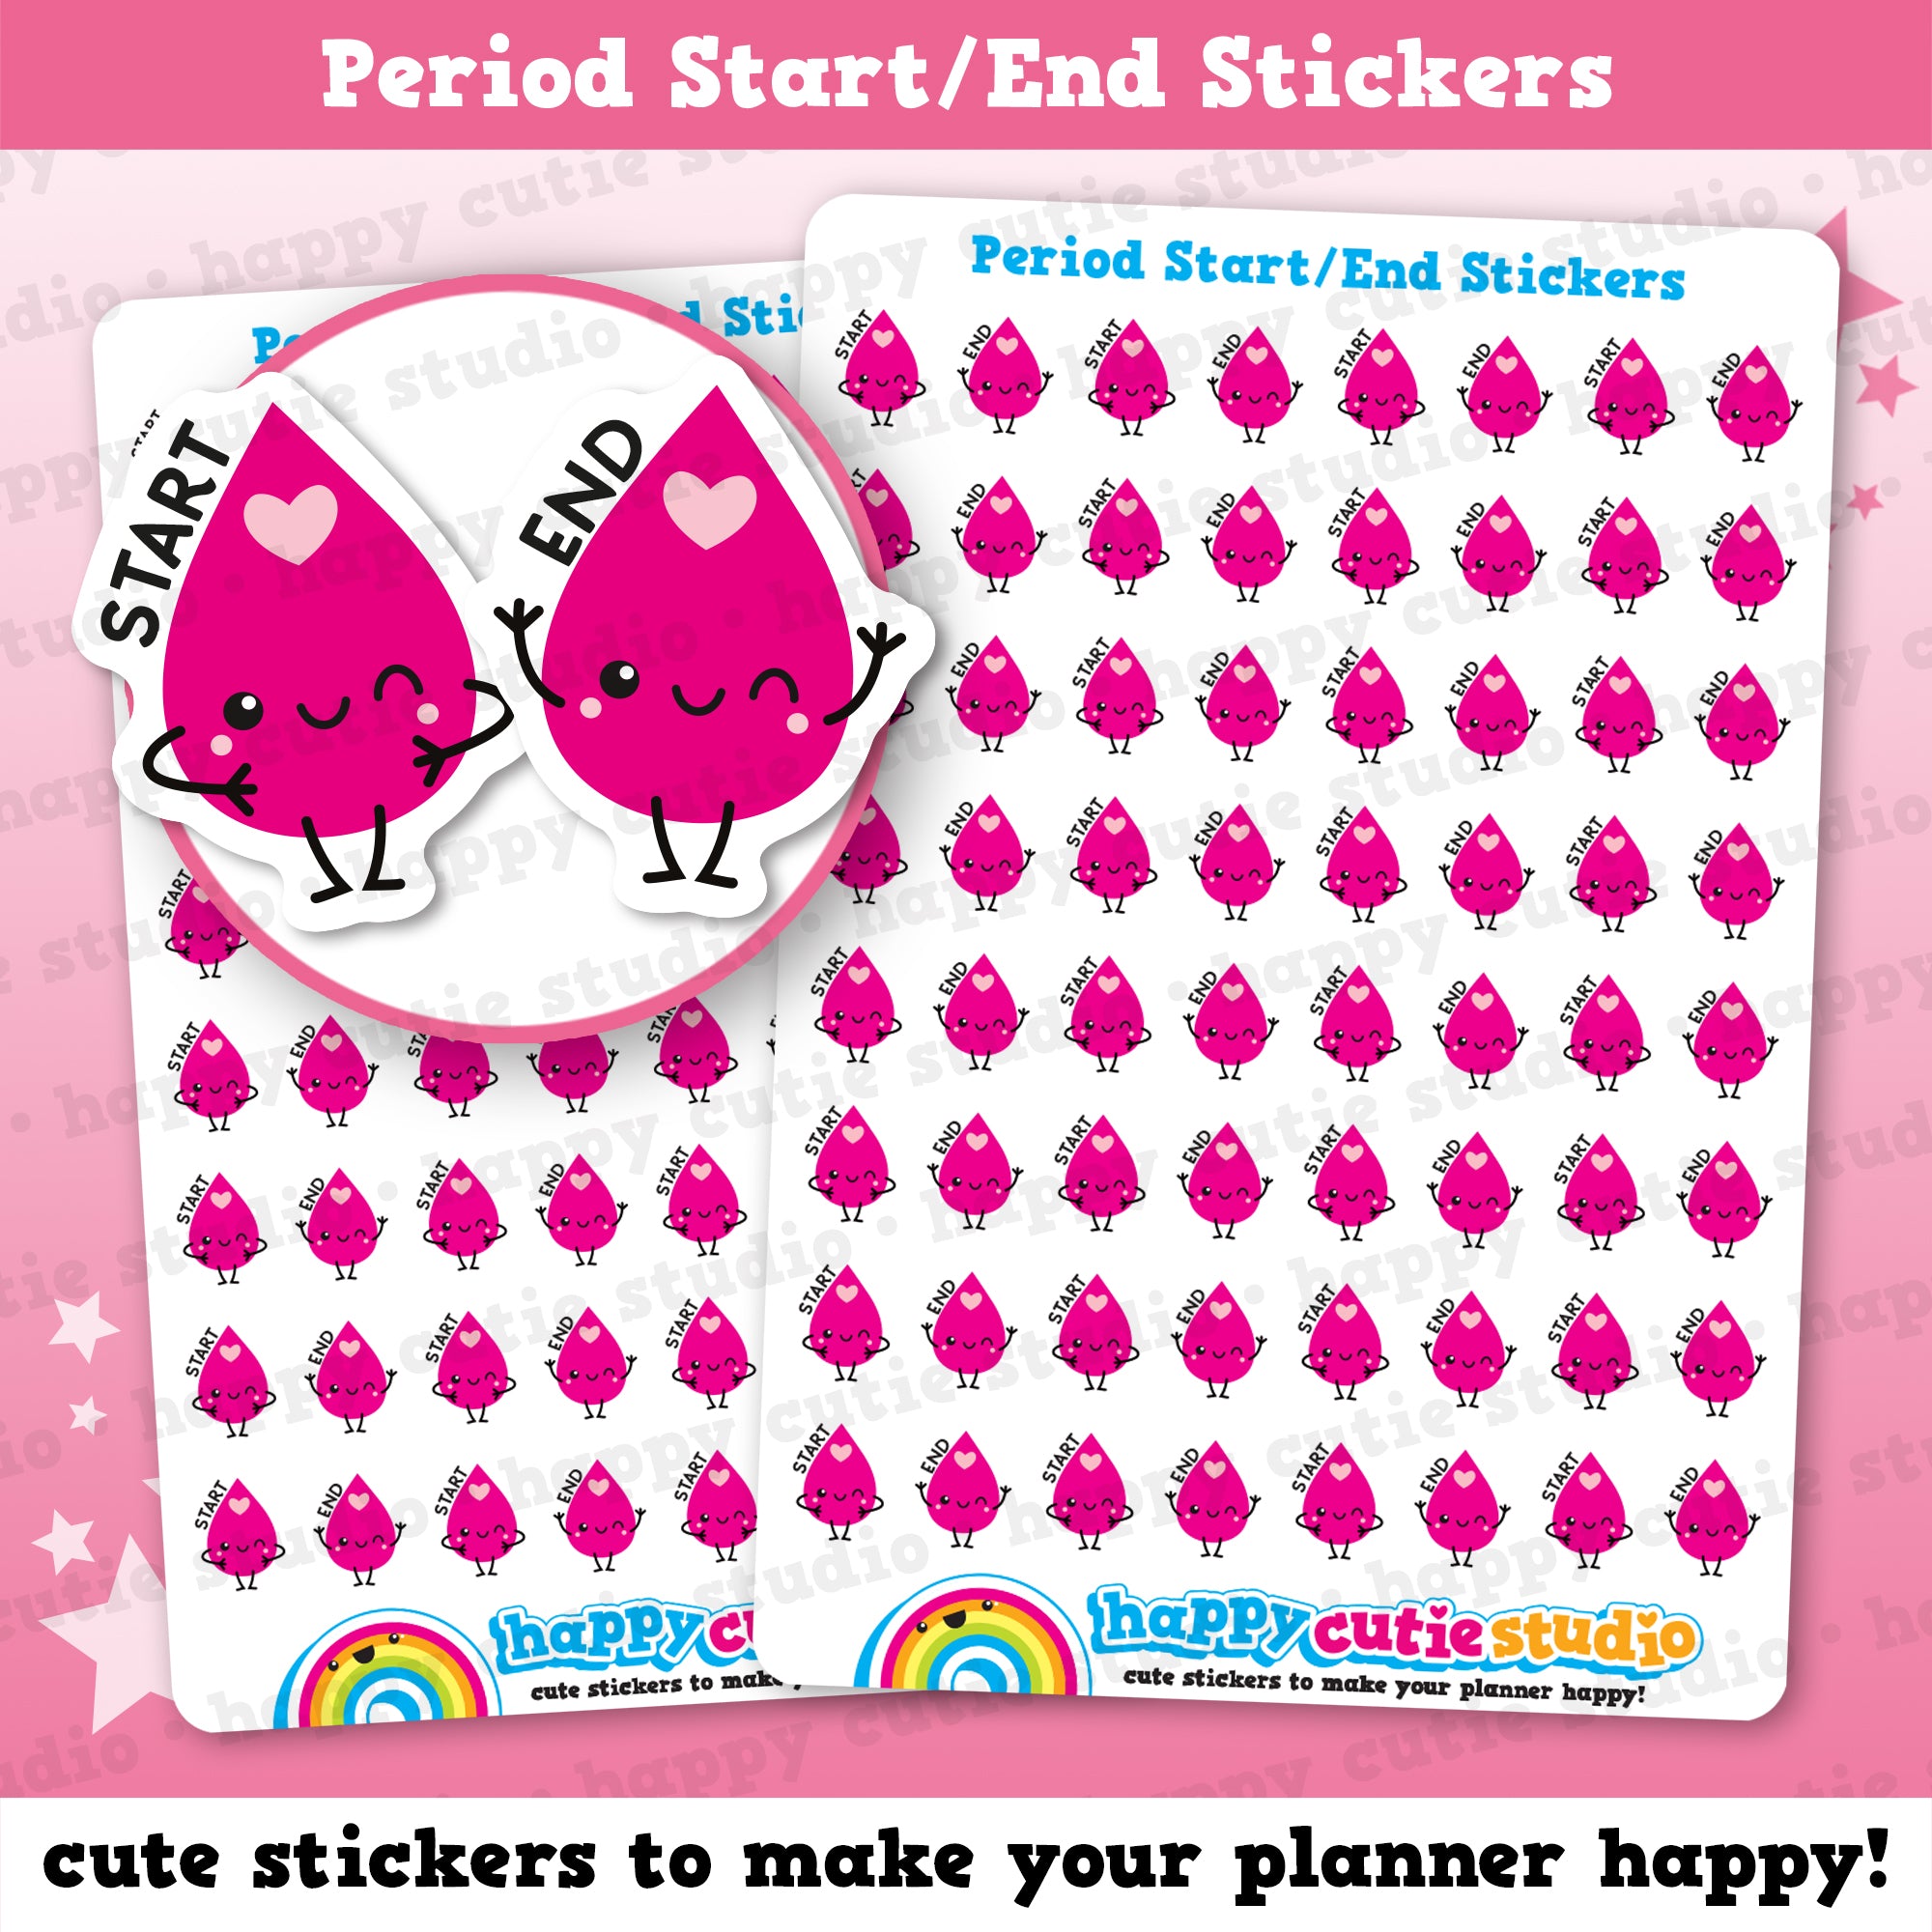 64 Cute Period Start/End Tracker Planner Stickers